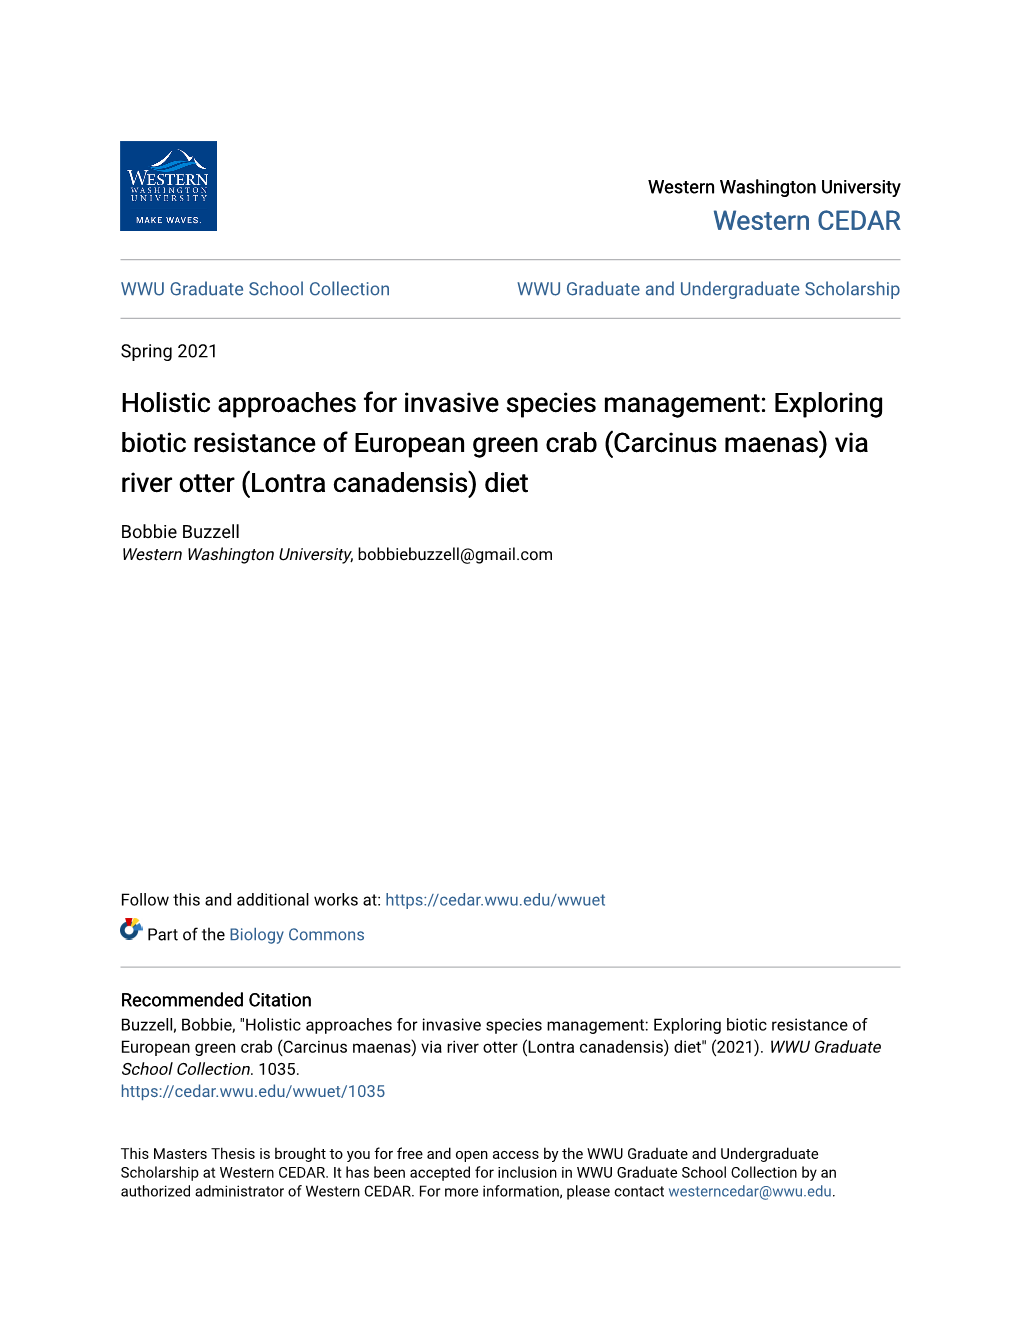 Exploring Biotic Resistance of European Green Crab (Carcinus Maenas) Via River Otter (Lontra Canadensis) Diet